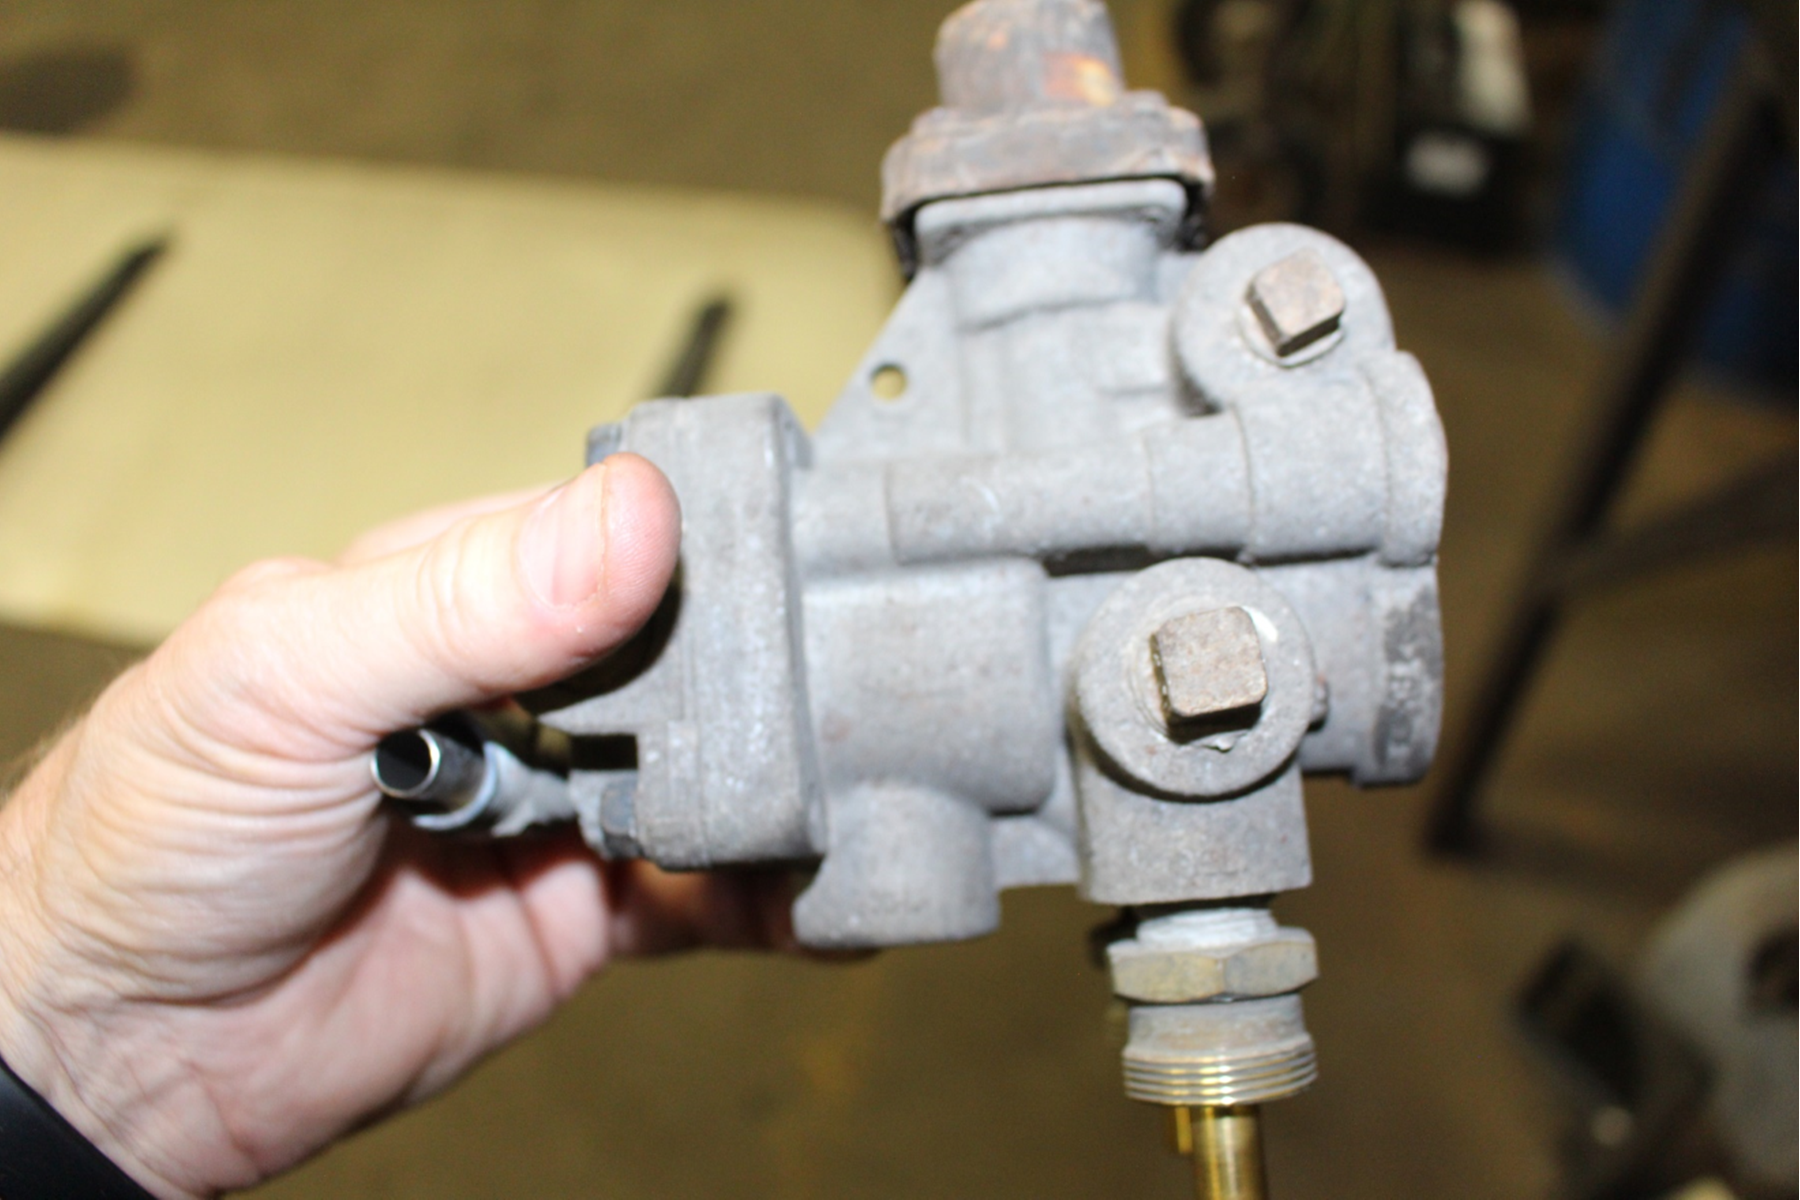 Figure 2 - Removed SR-5 valve